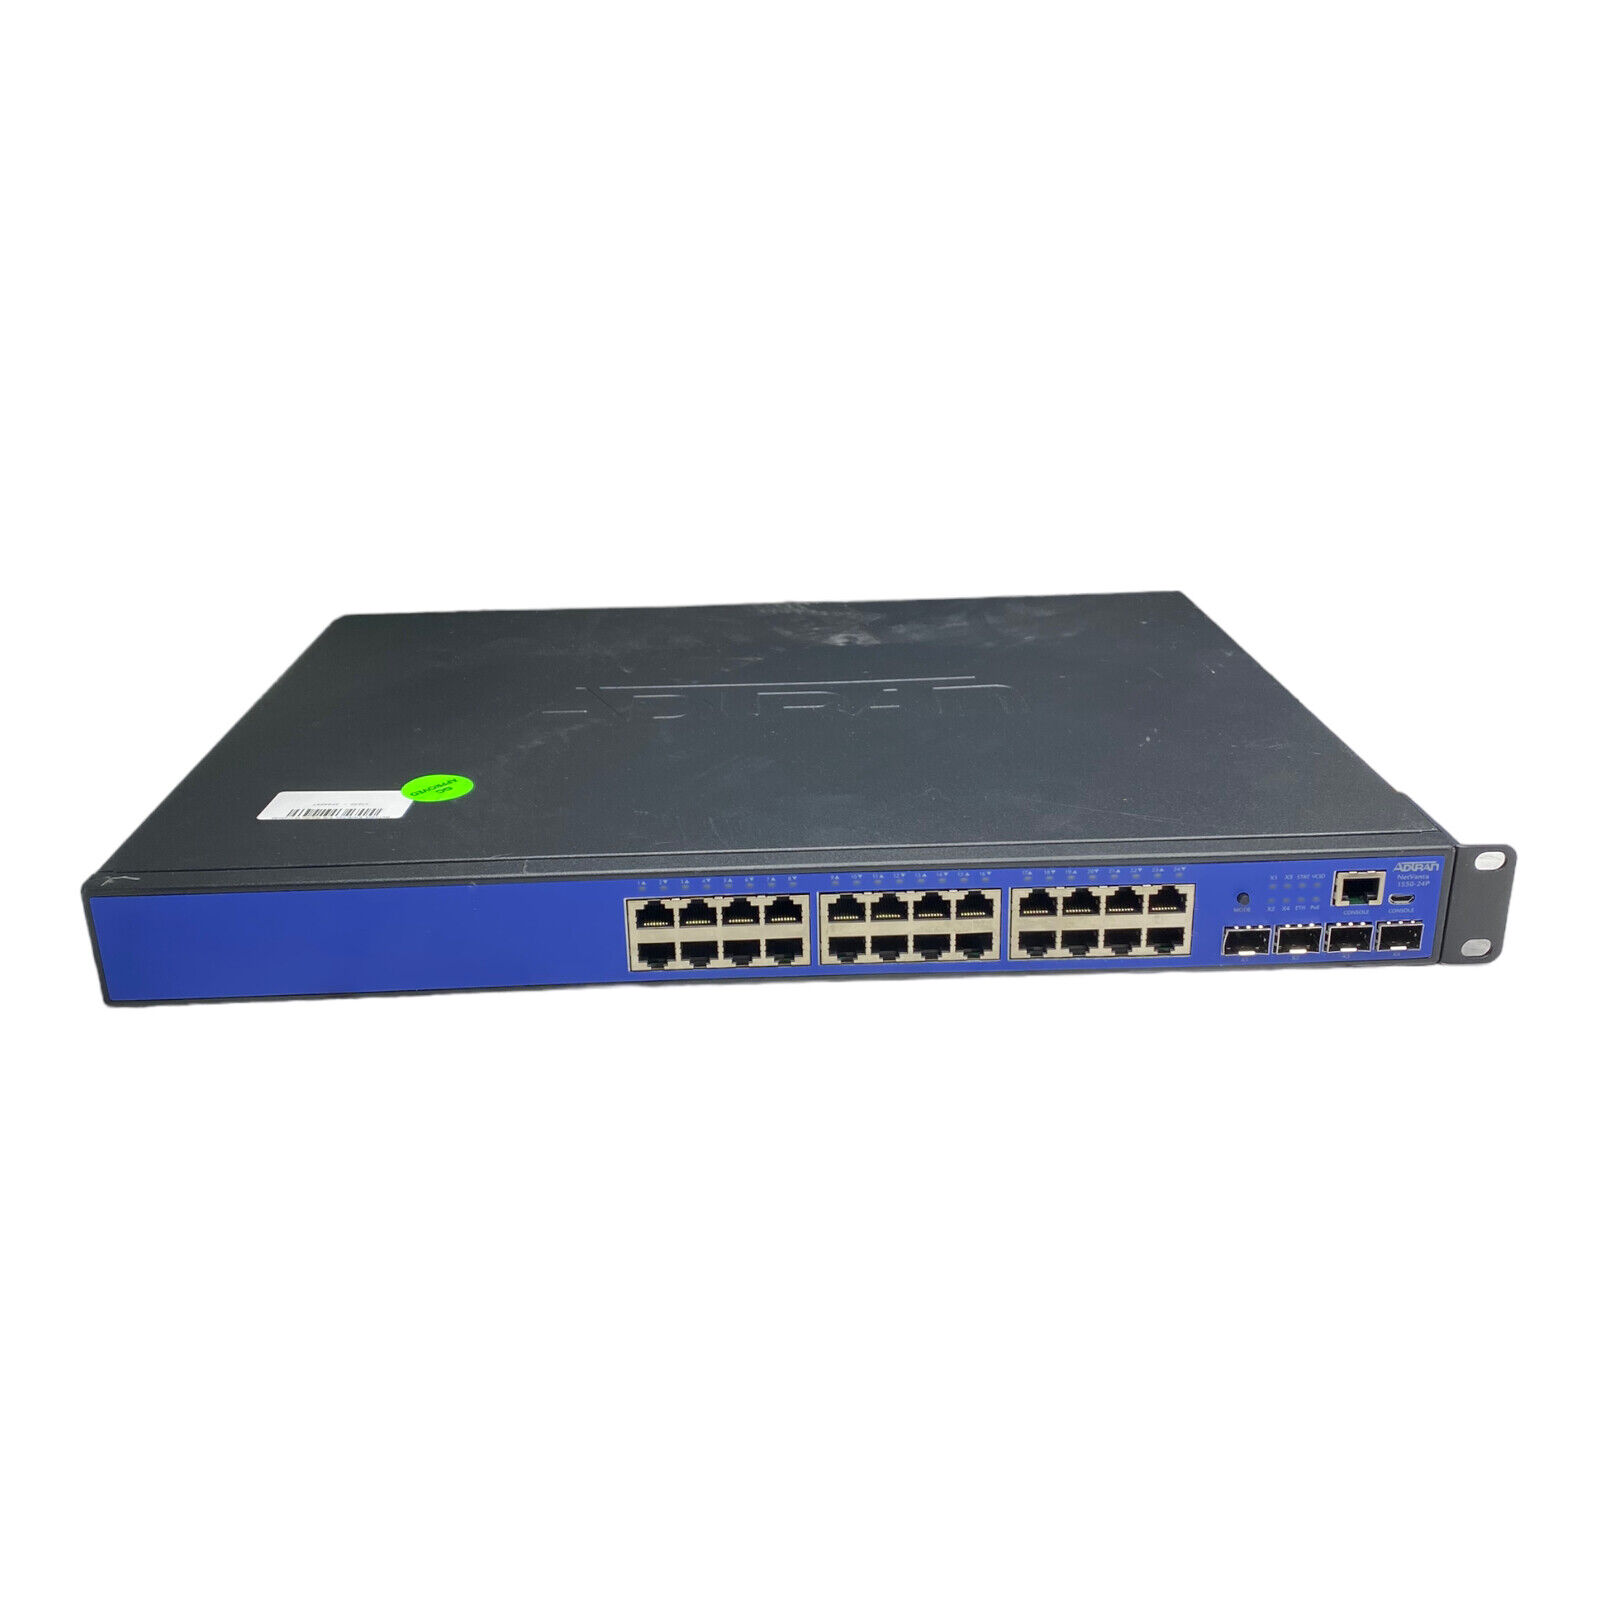 ADTRAN NetVanta 1550-24P Network Switch 24 Ports Tested